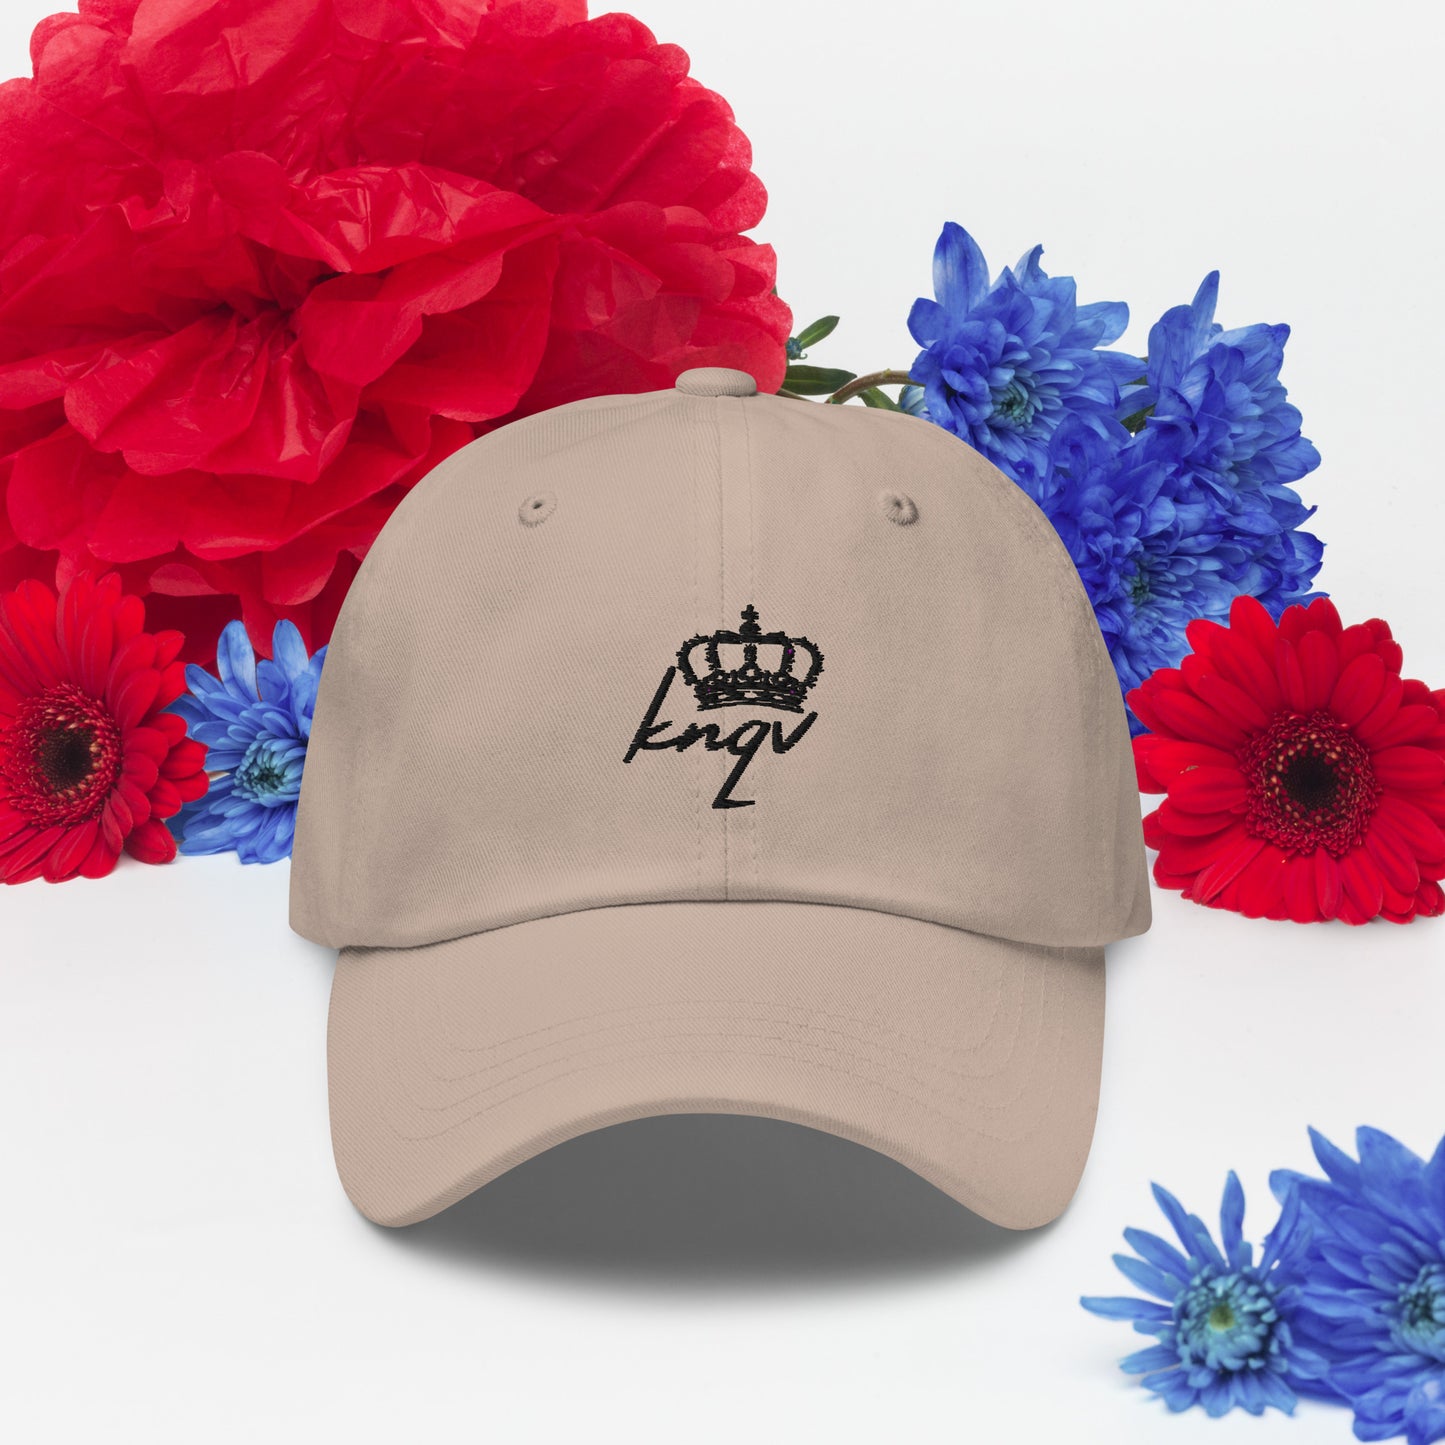 Knqv Crown Brand Original Mom/Pops Hat